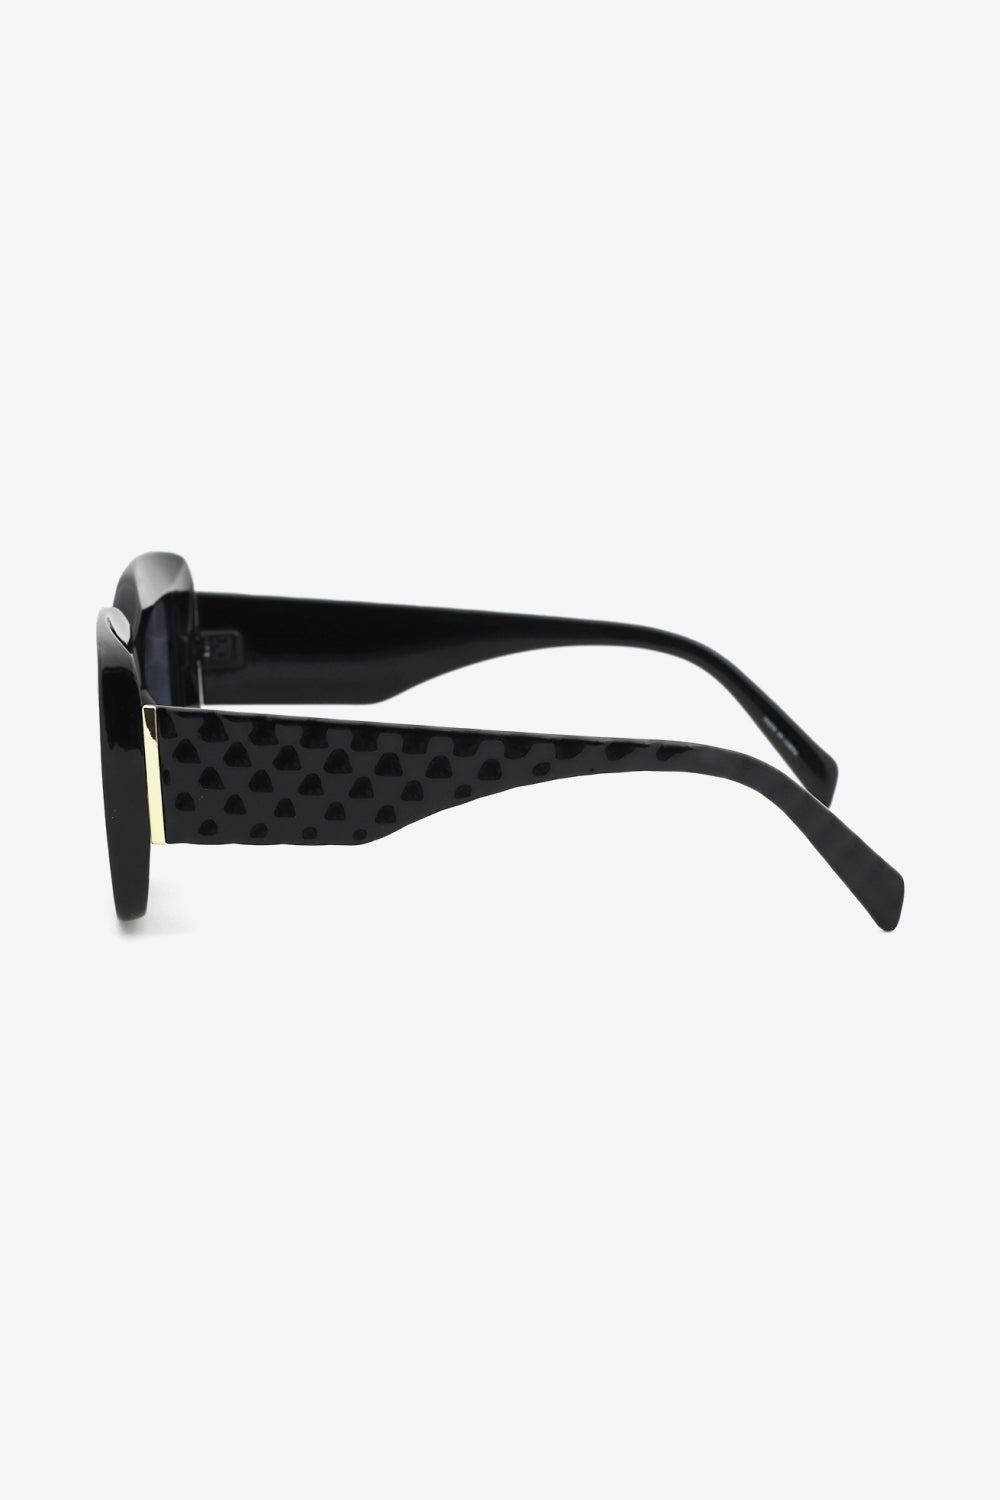 Square Polycarbonate UV400 Sunglasses